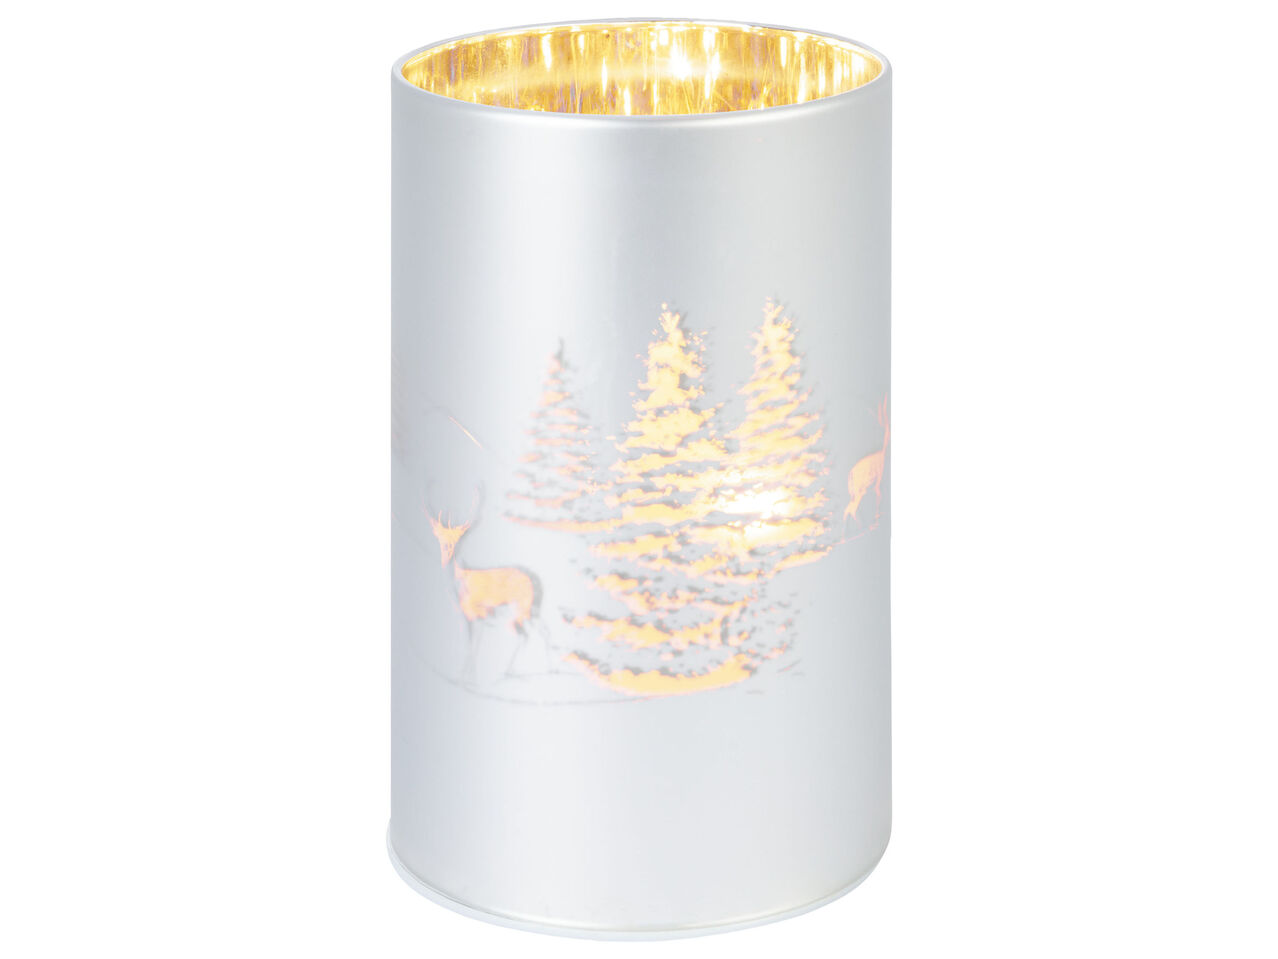 LIVARNO HOME® Lampion LED , cena 24,99 PLN 
LIVARNO HOME® Lampion LED 3 wzory ...